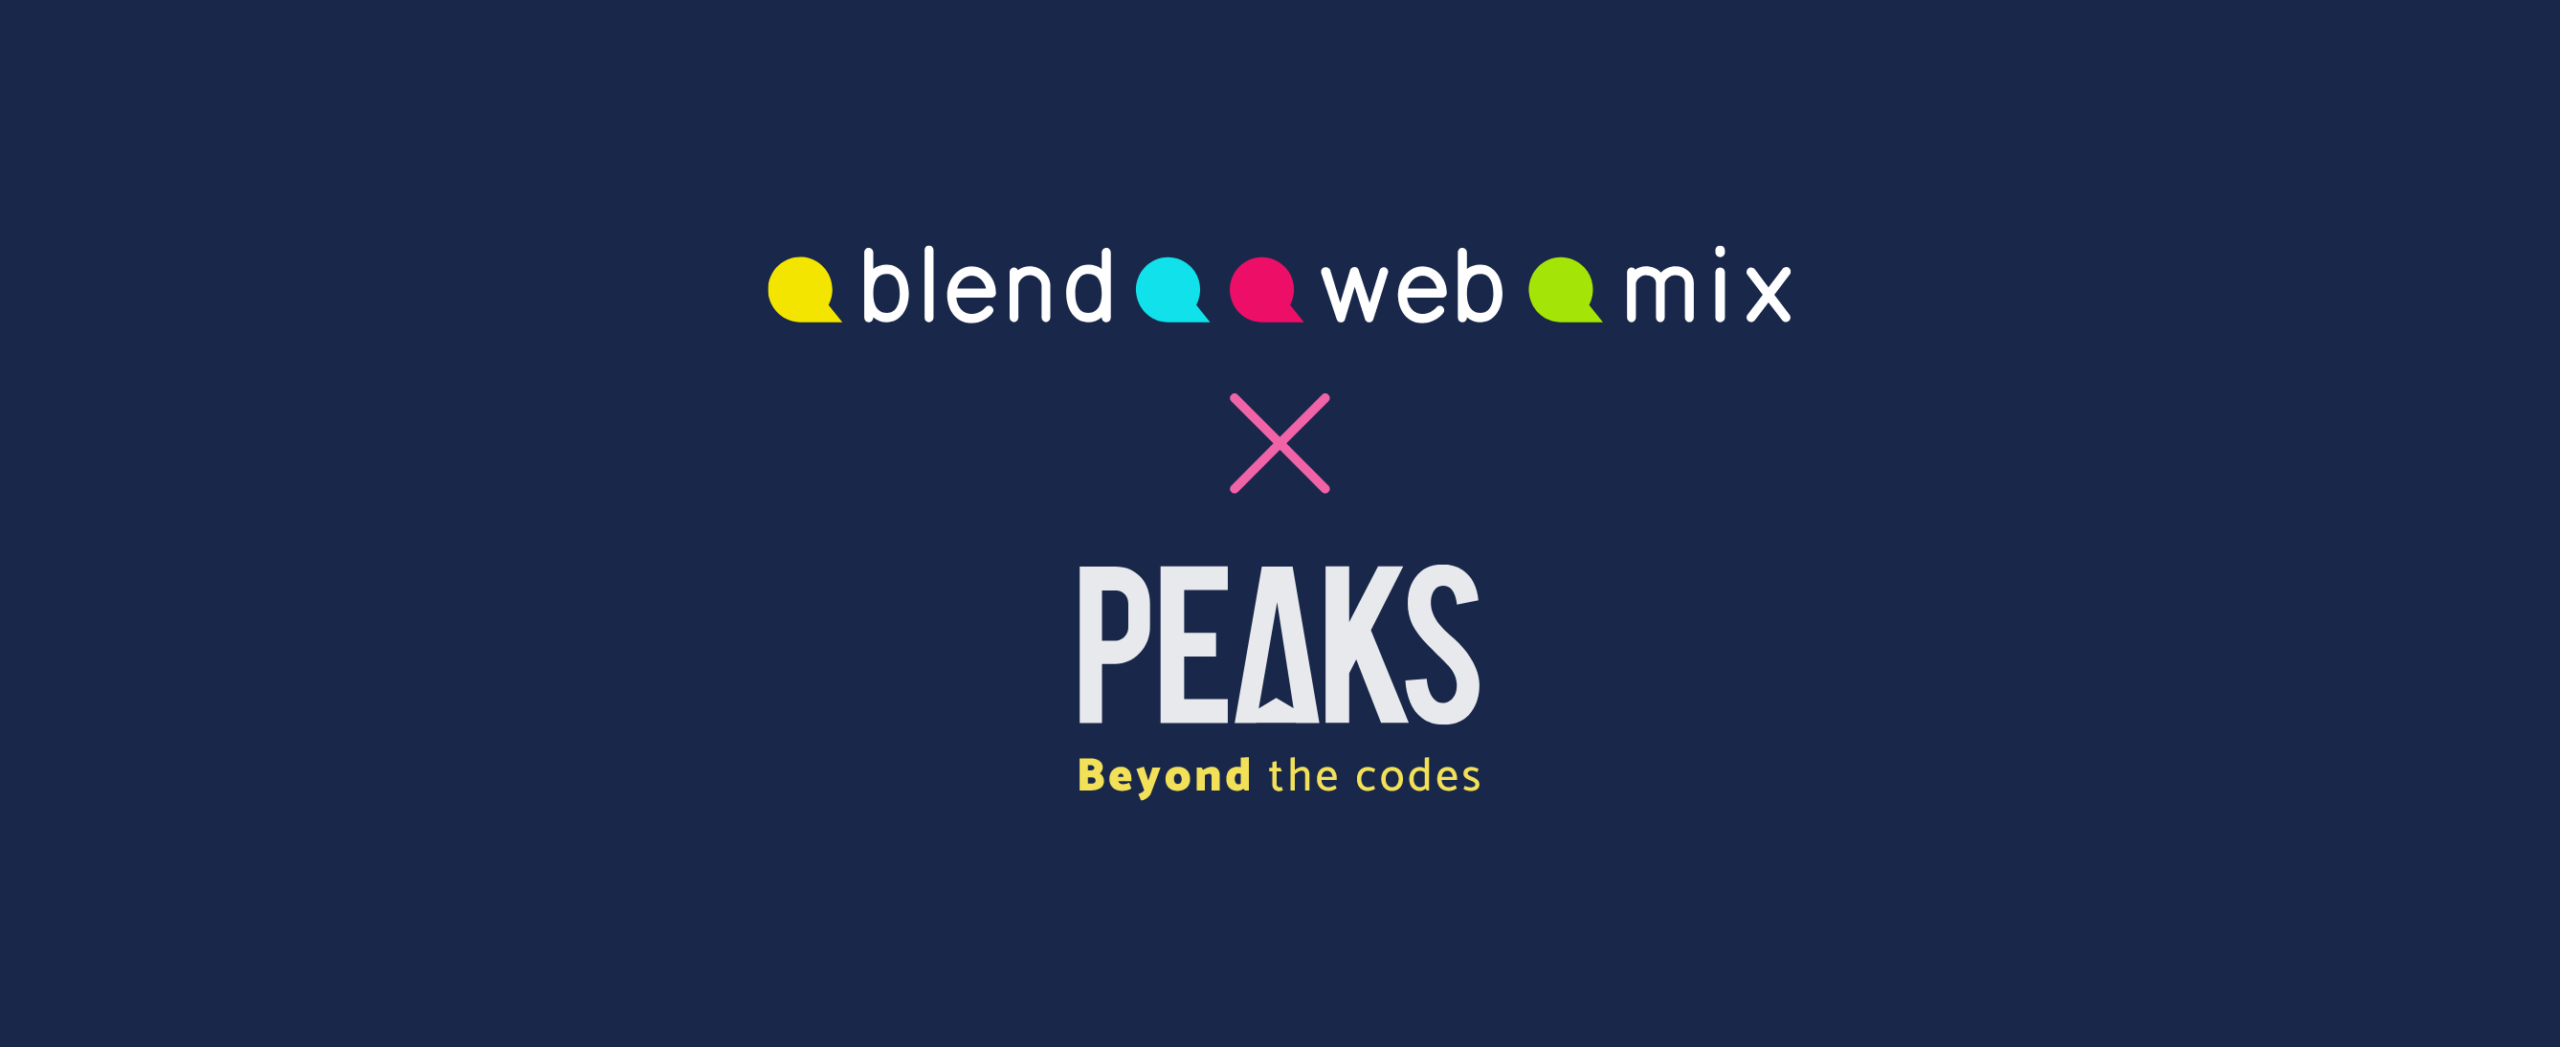 Peaks est sponsor du BlendWebMix